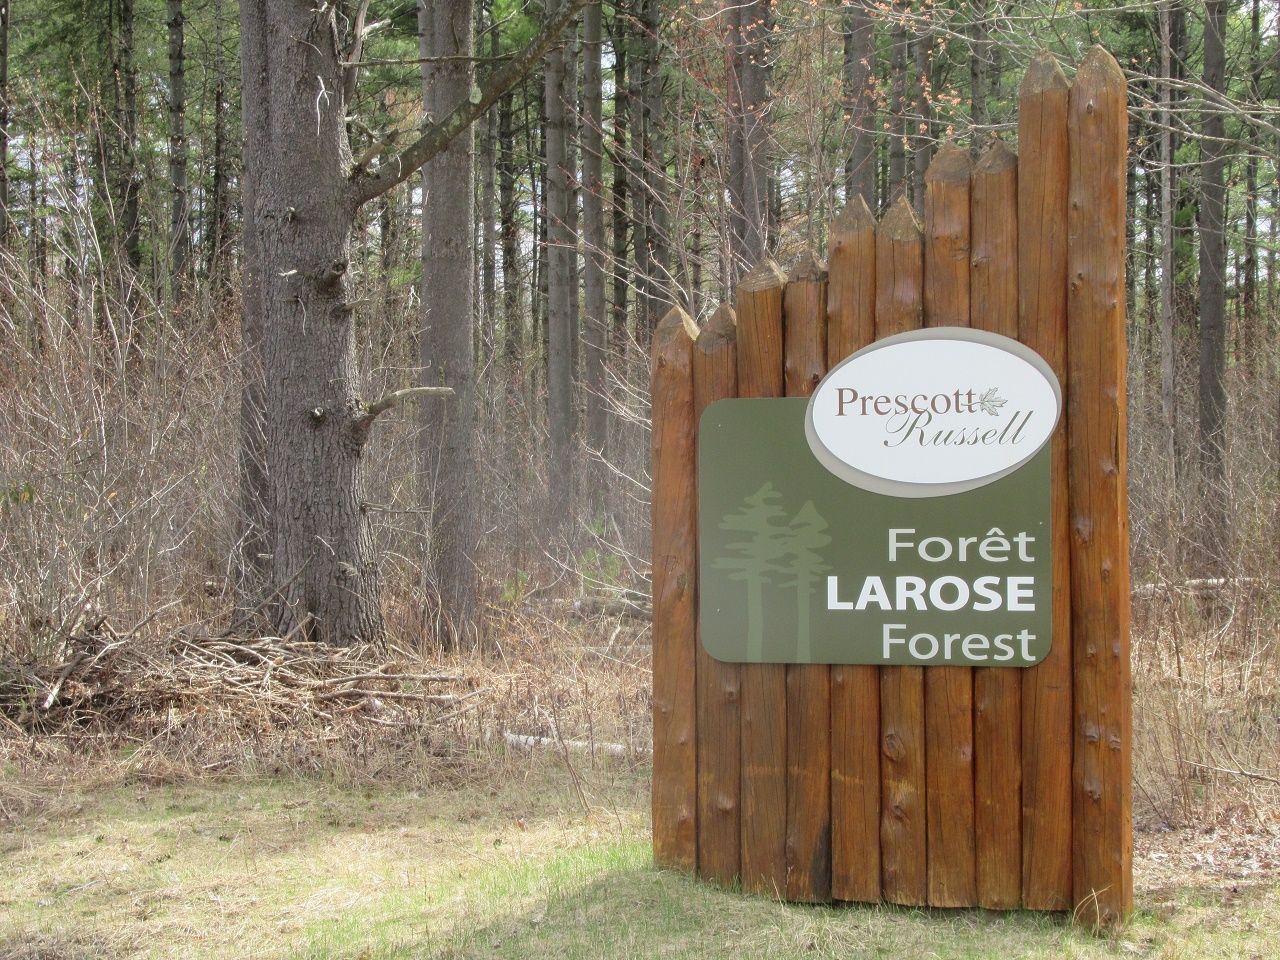 Trails in Larose Forest open